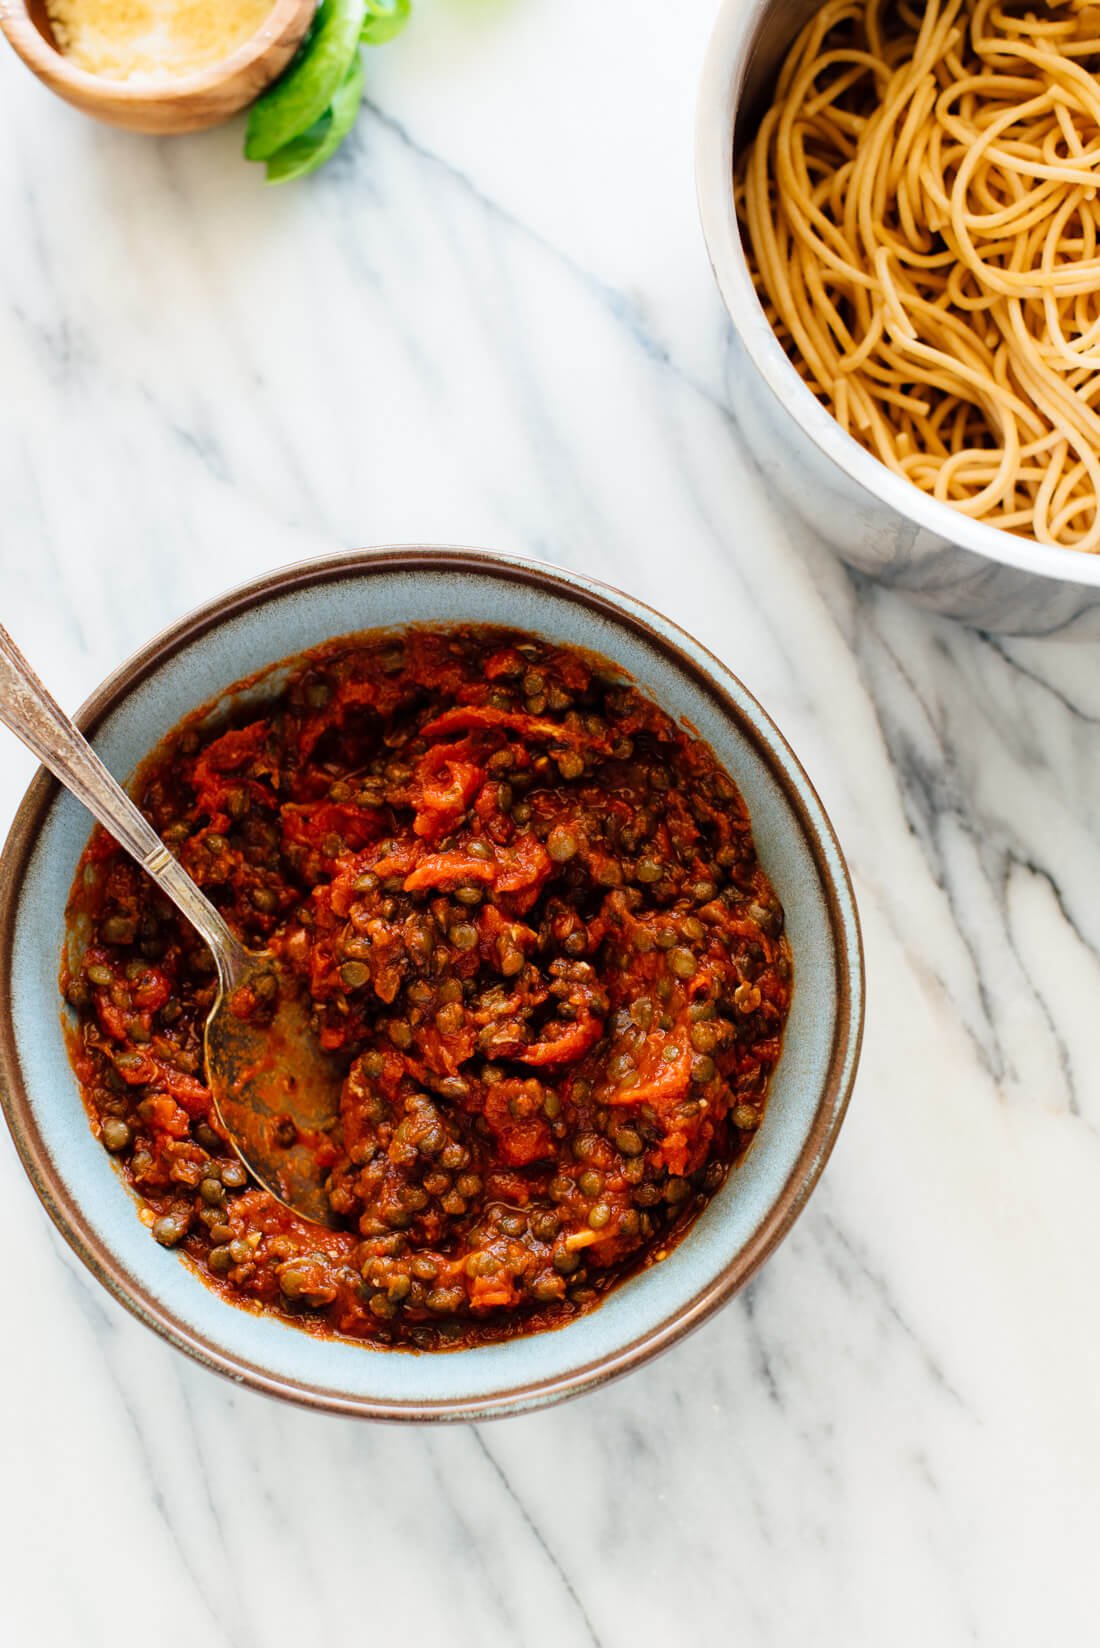 lentils with marinara sauce and pasta recipe